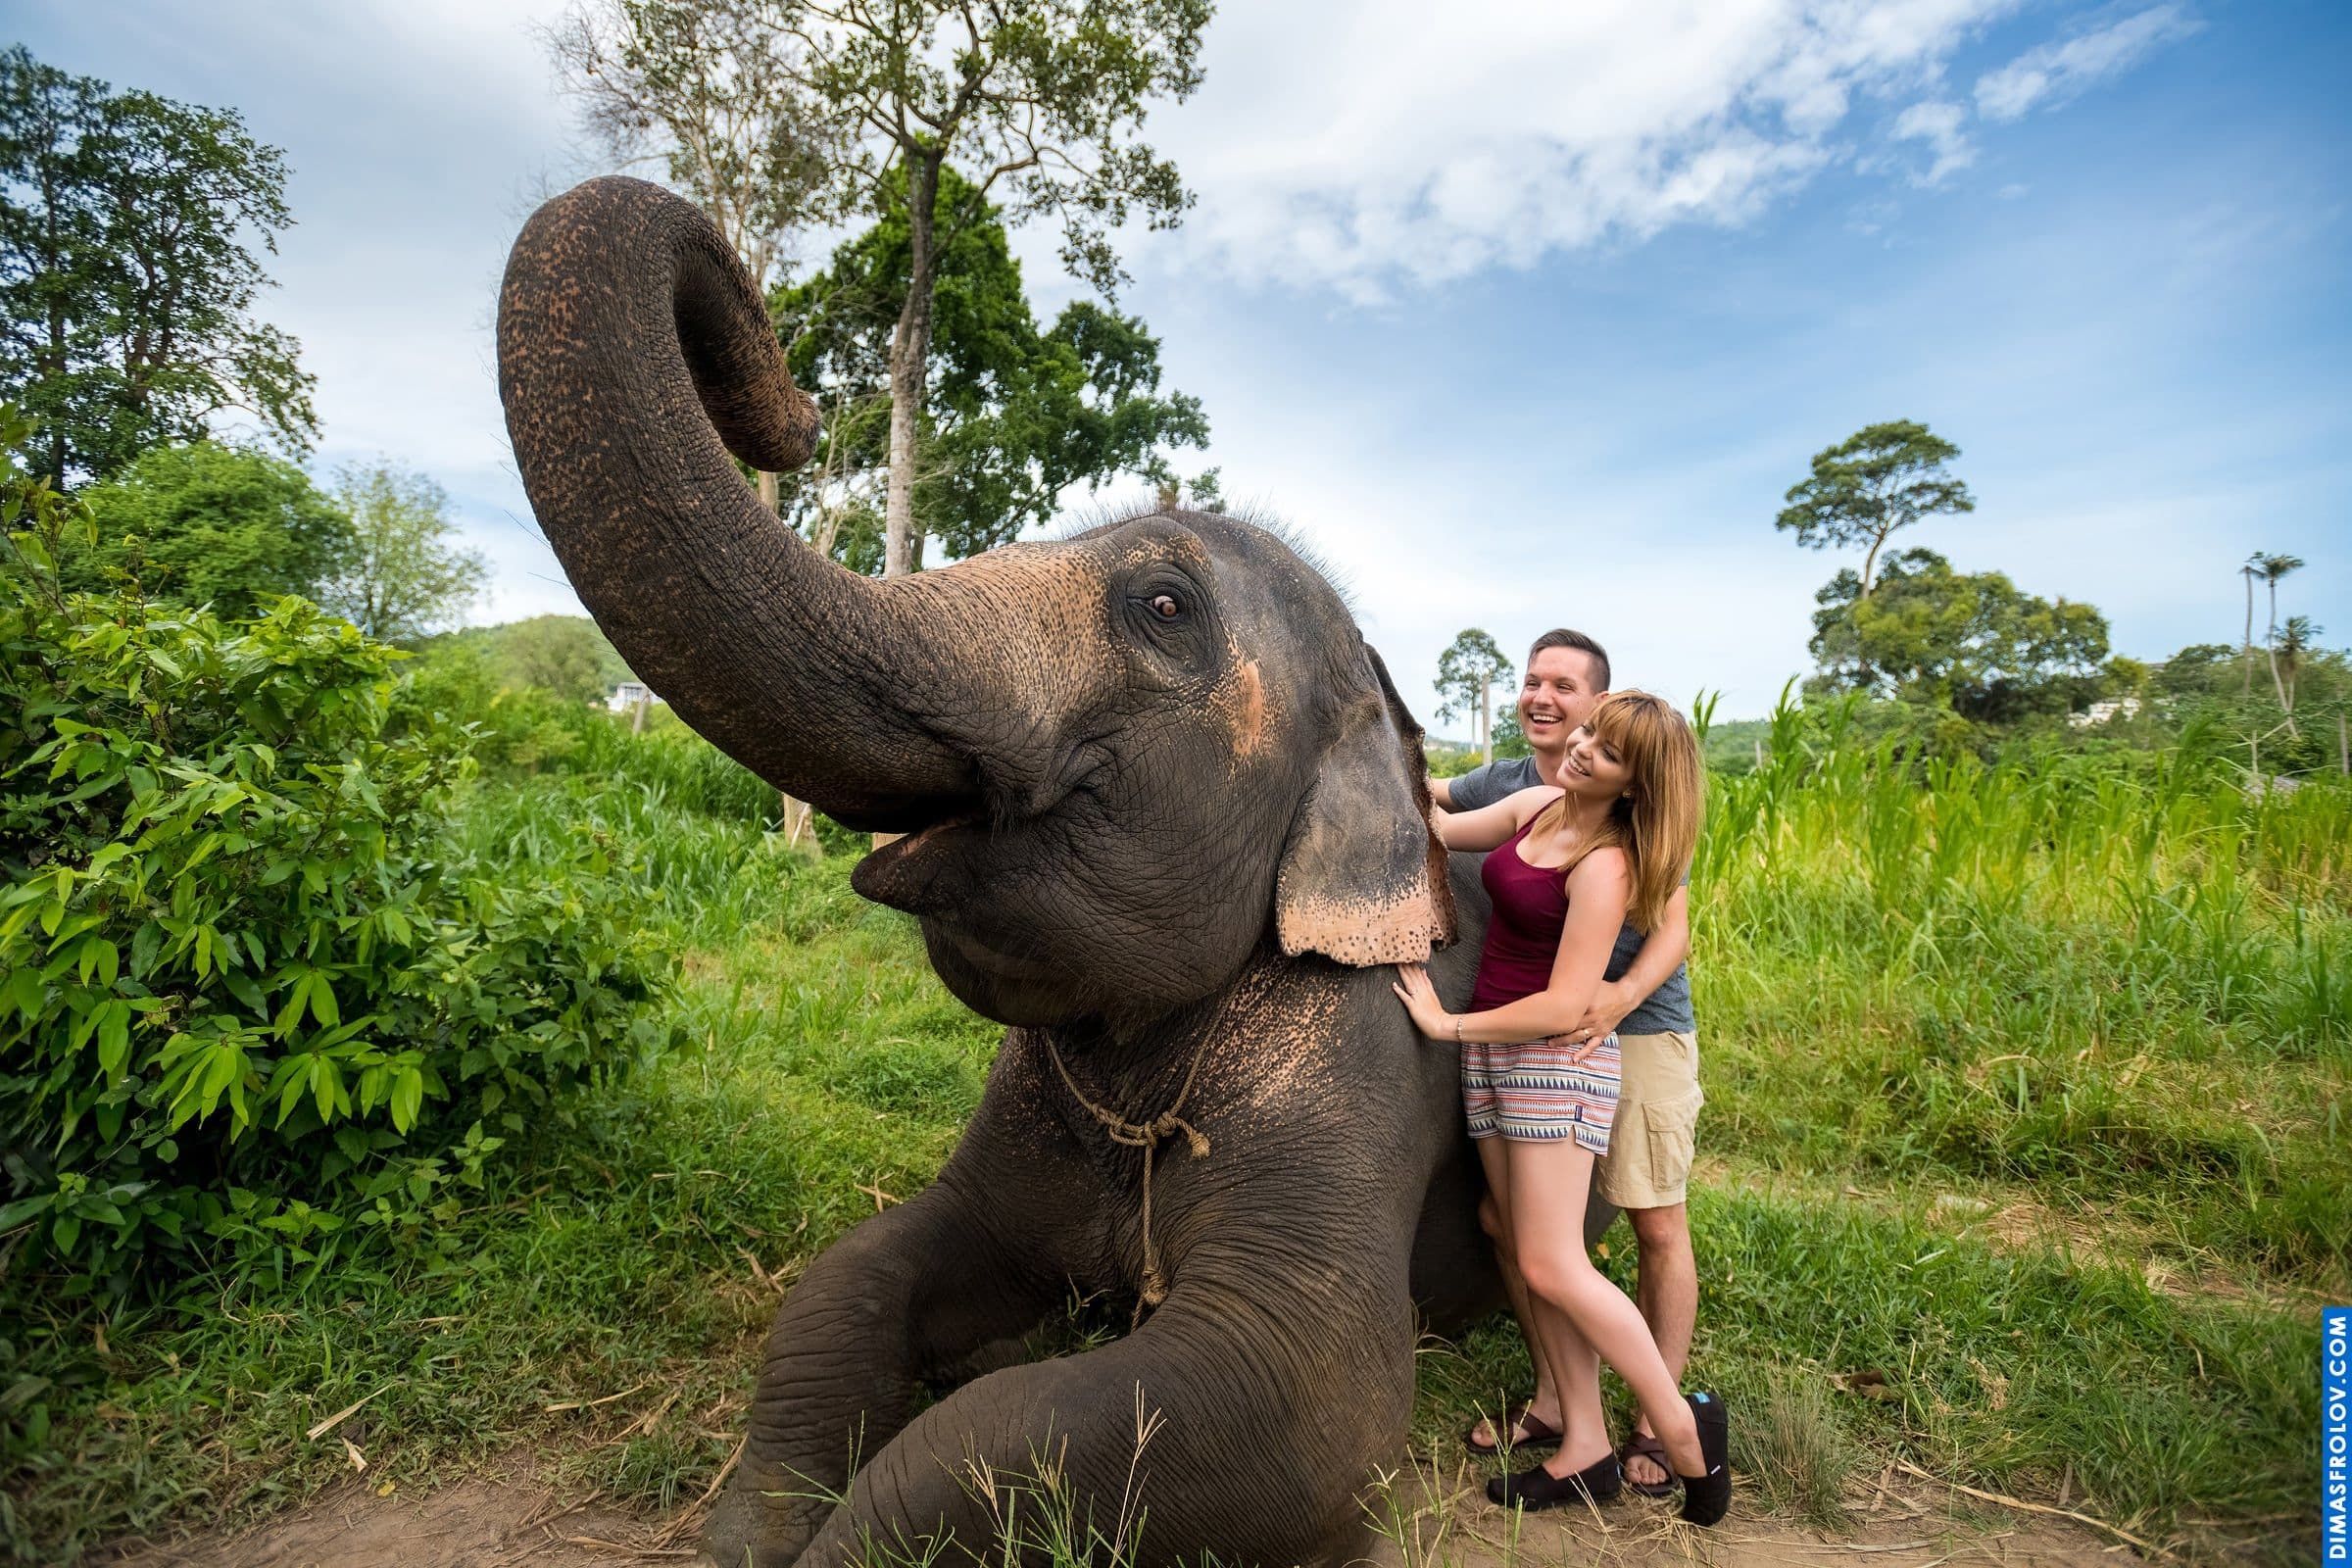 Photo shoot with an elephant on Koh Samui. photographer Dimas Frolov. photo1739